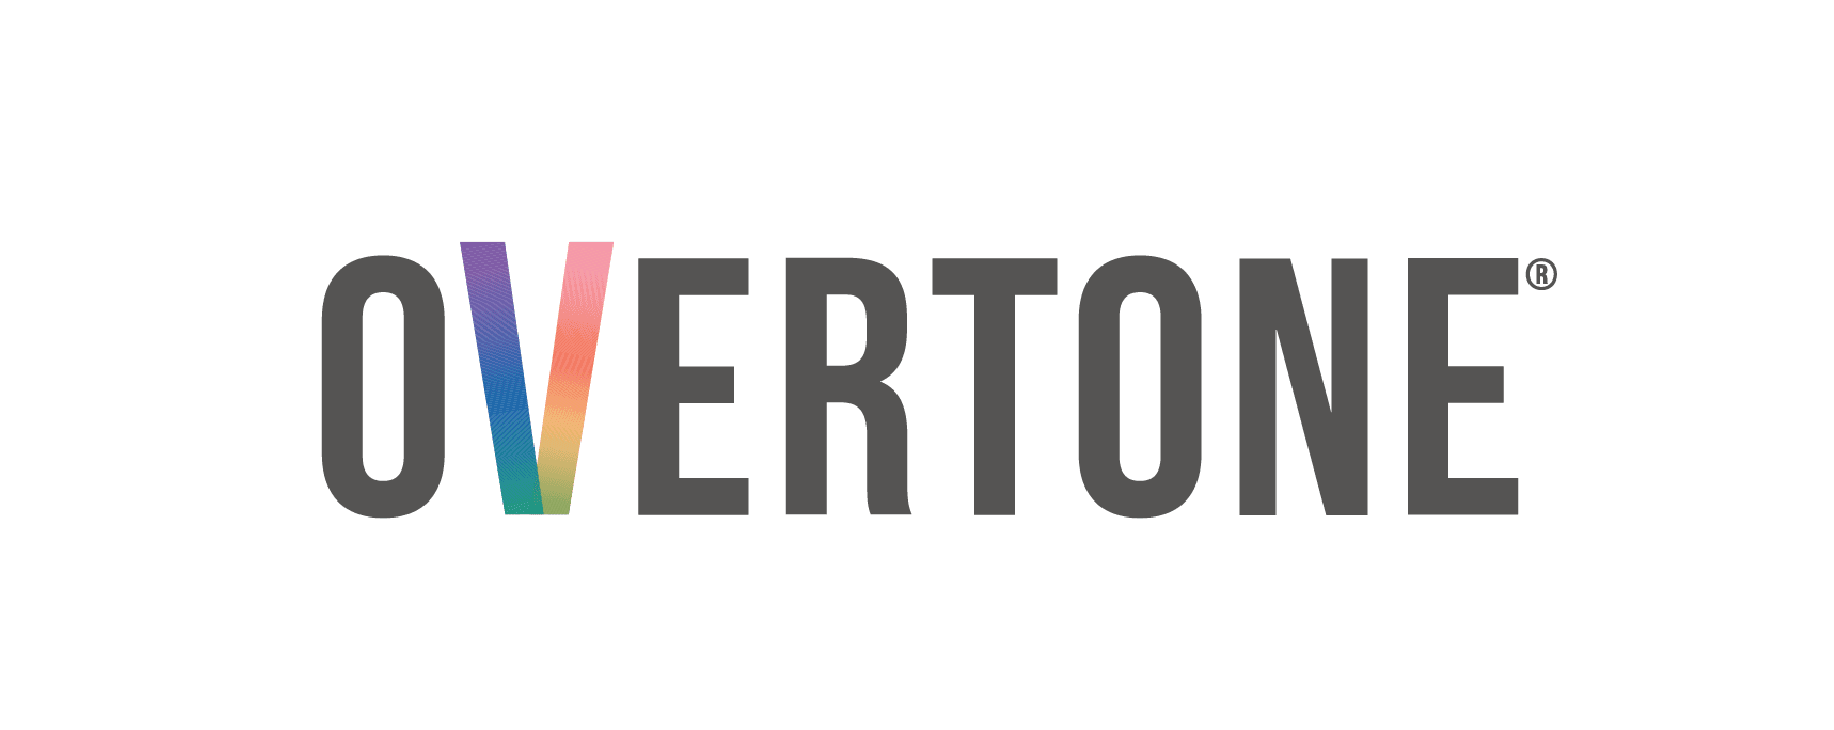 HR services - oVertone